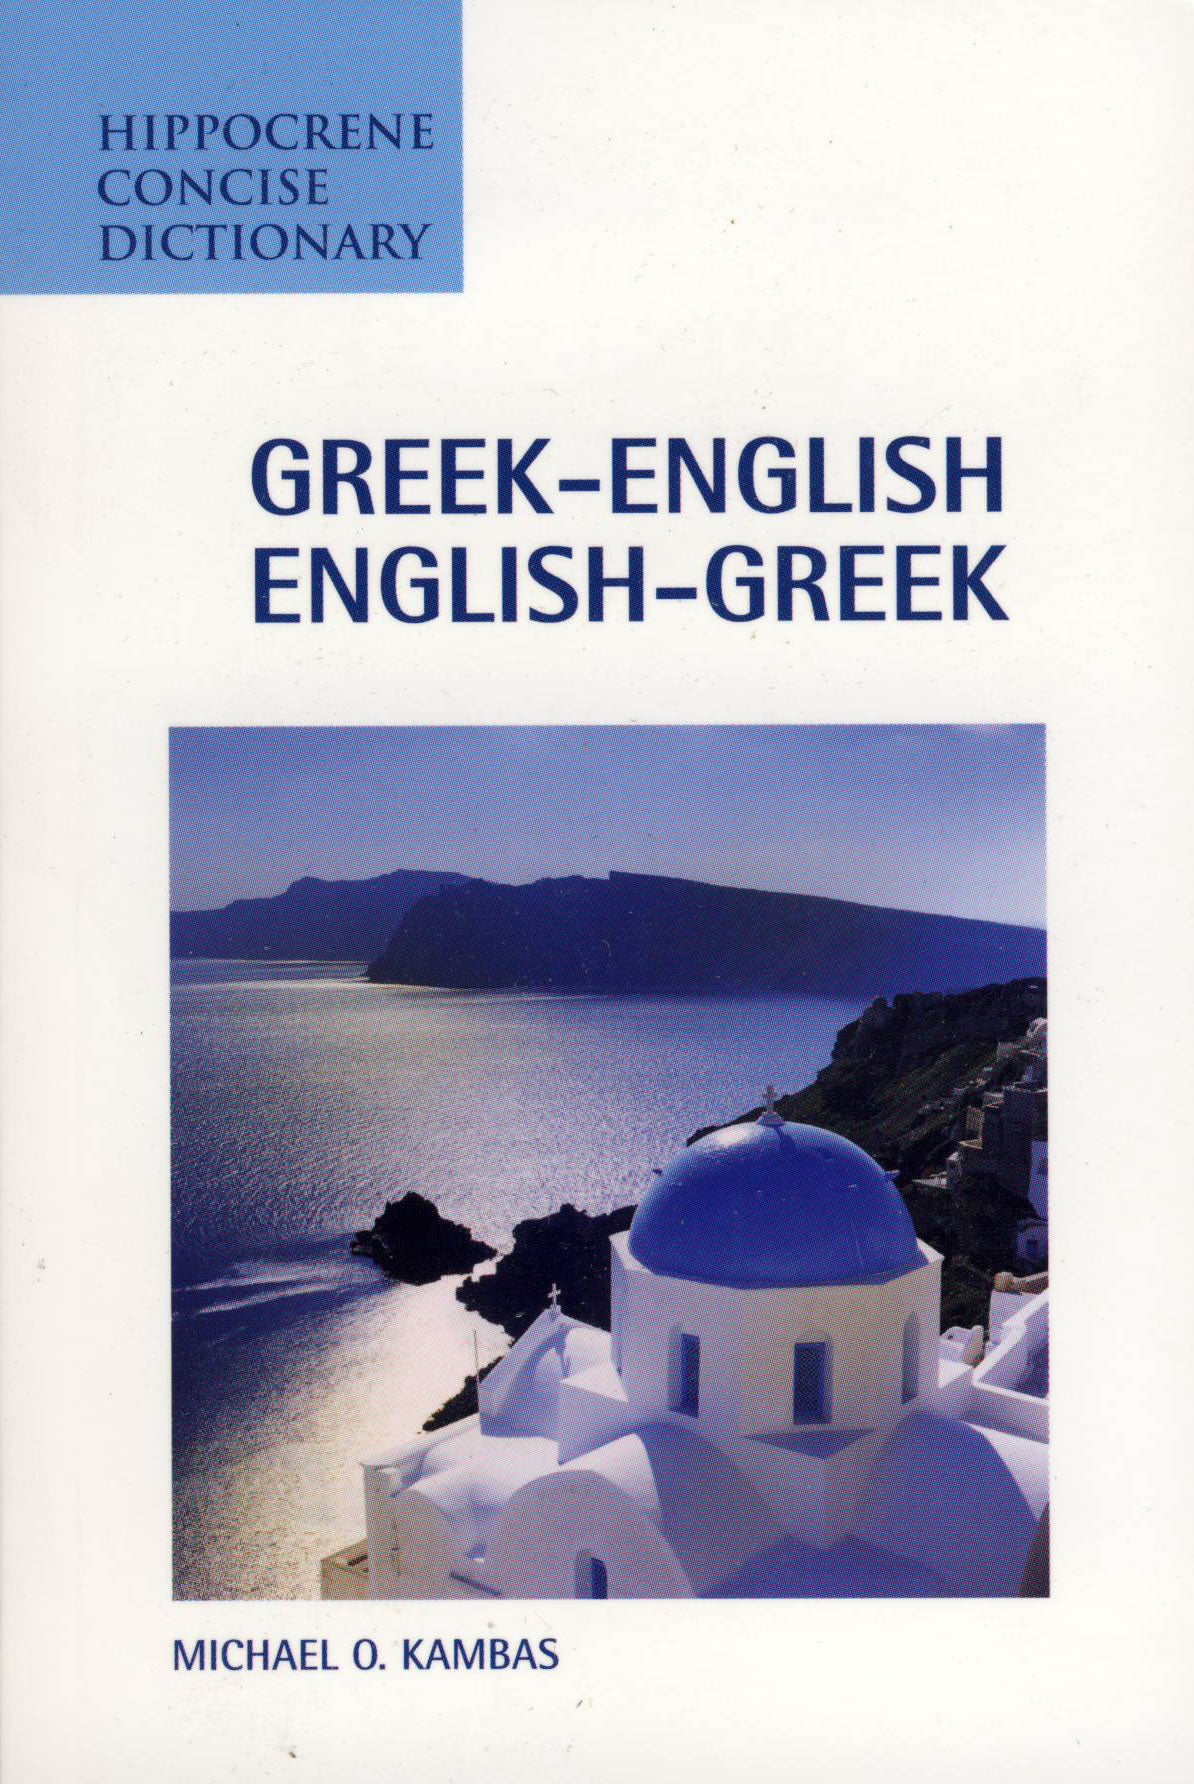 Greek-English / English-Greek Hipp Concise Dictionary